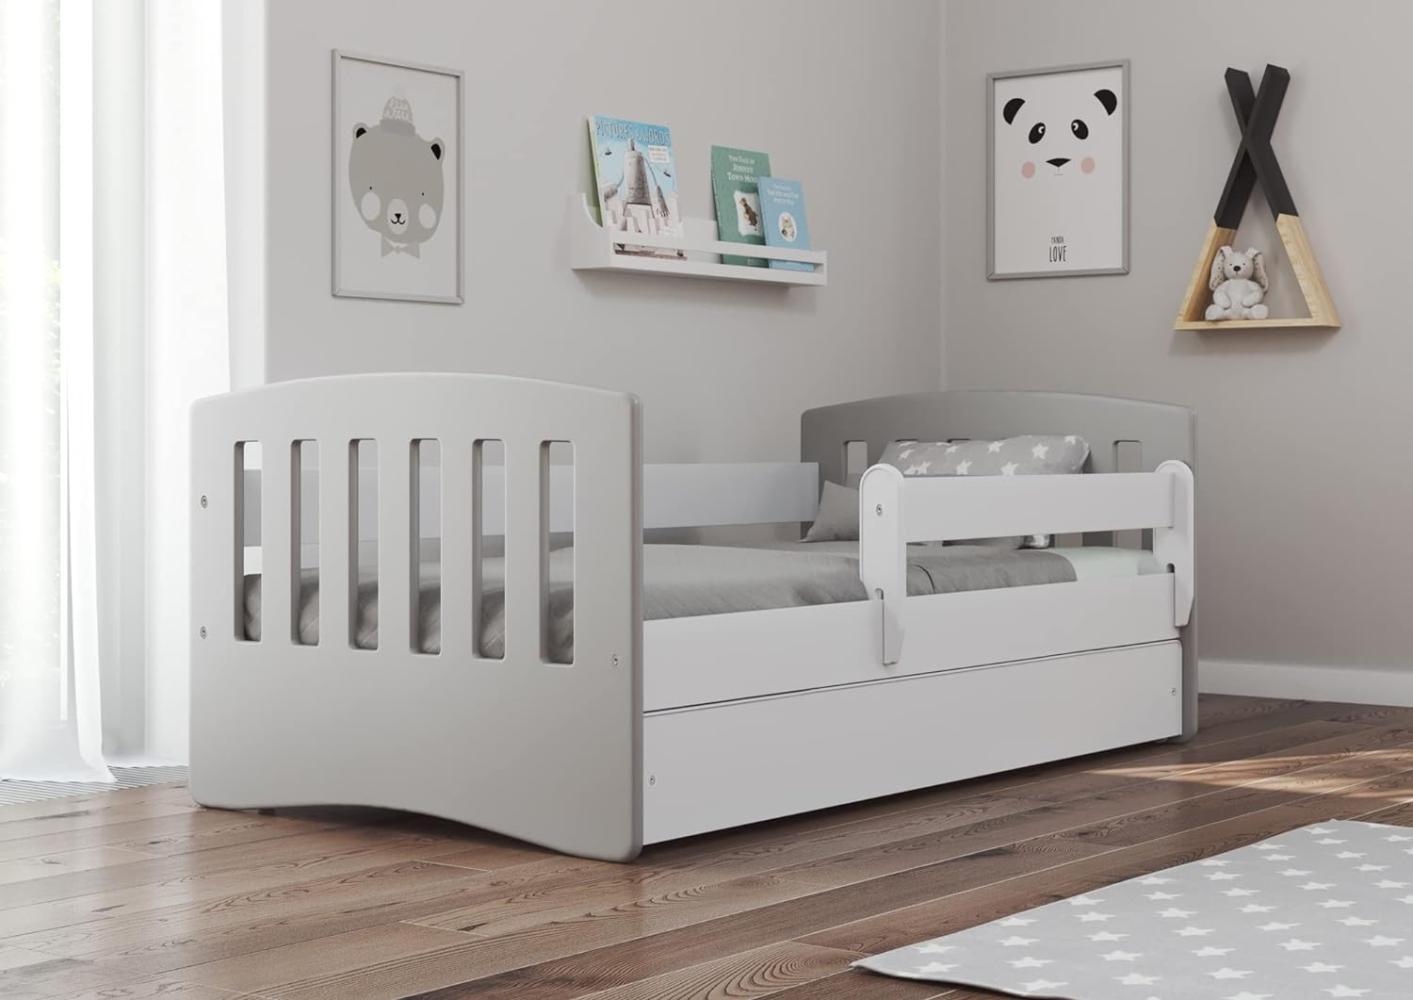 Bjird 'Classic' Kinderbett 80 x 180 cm, Grau, inkl. Rausfallschutz, Lattenrost und Bettschublade Bild 1